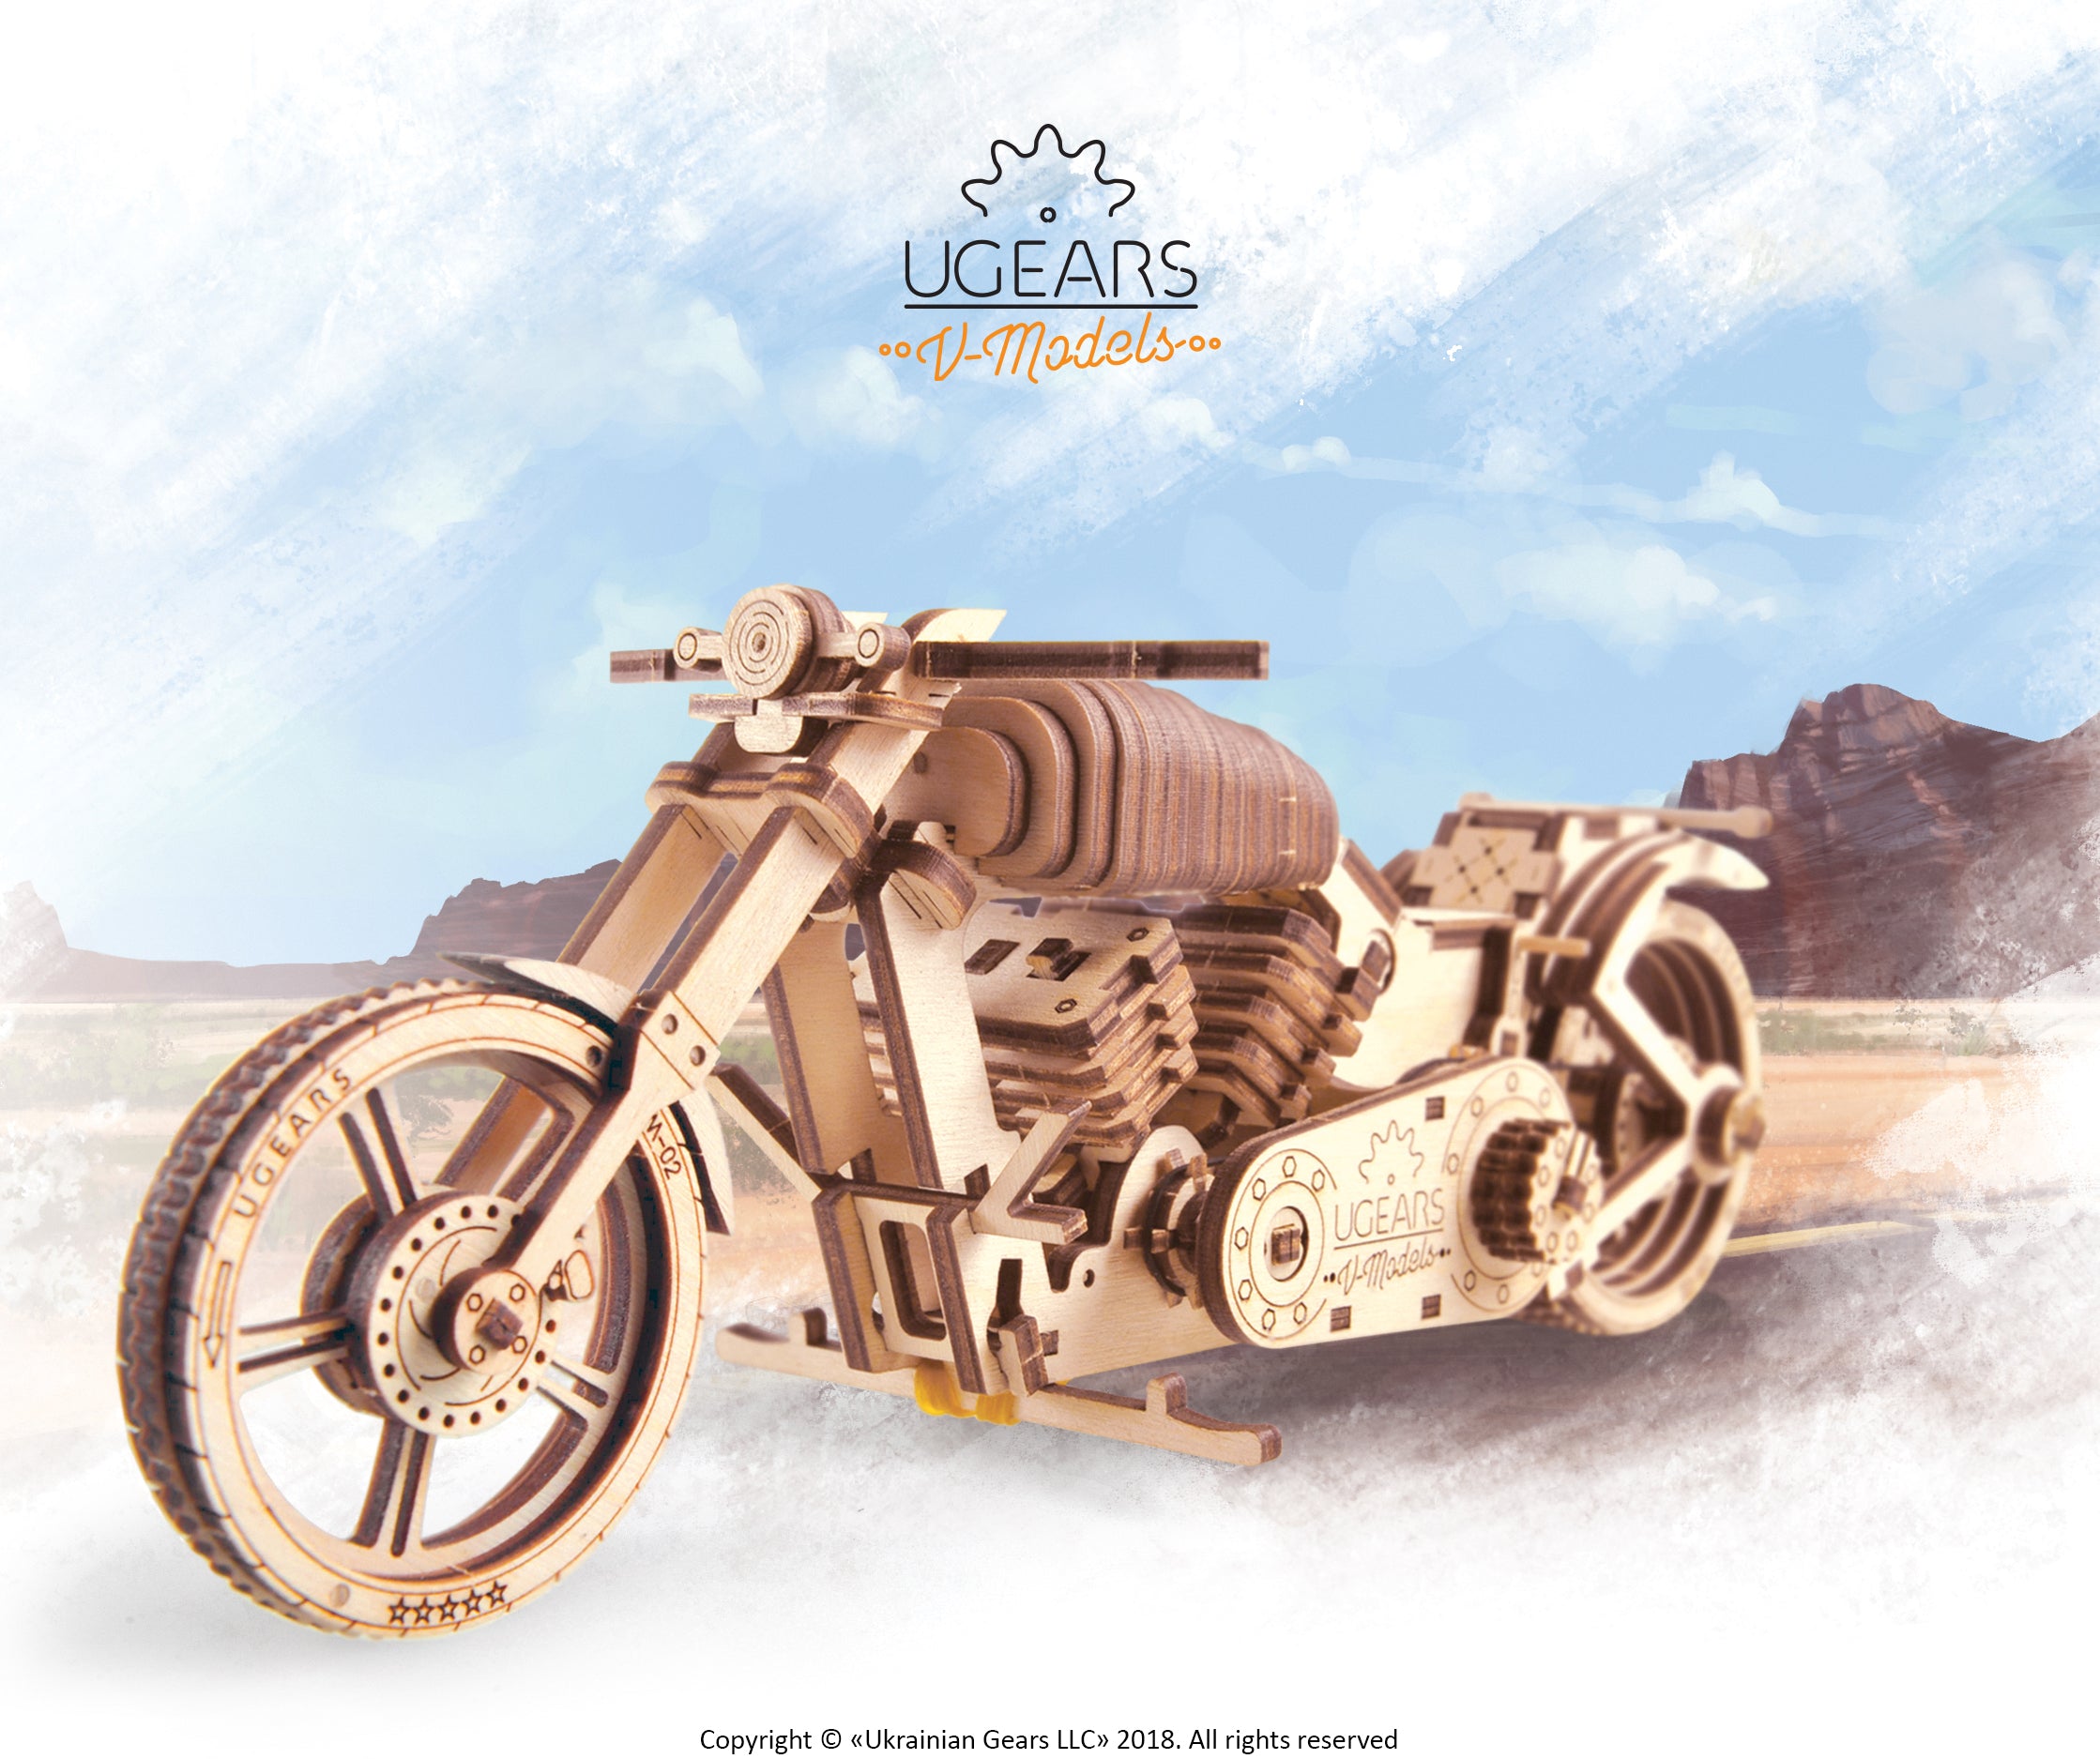 VM 02 - Motorrad - Chopper Bike